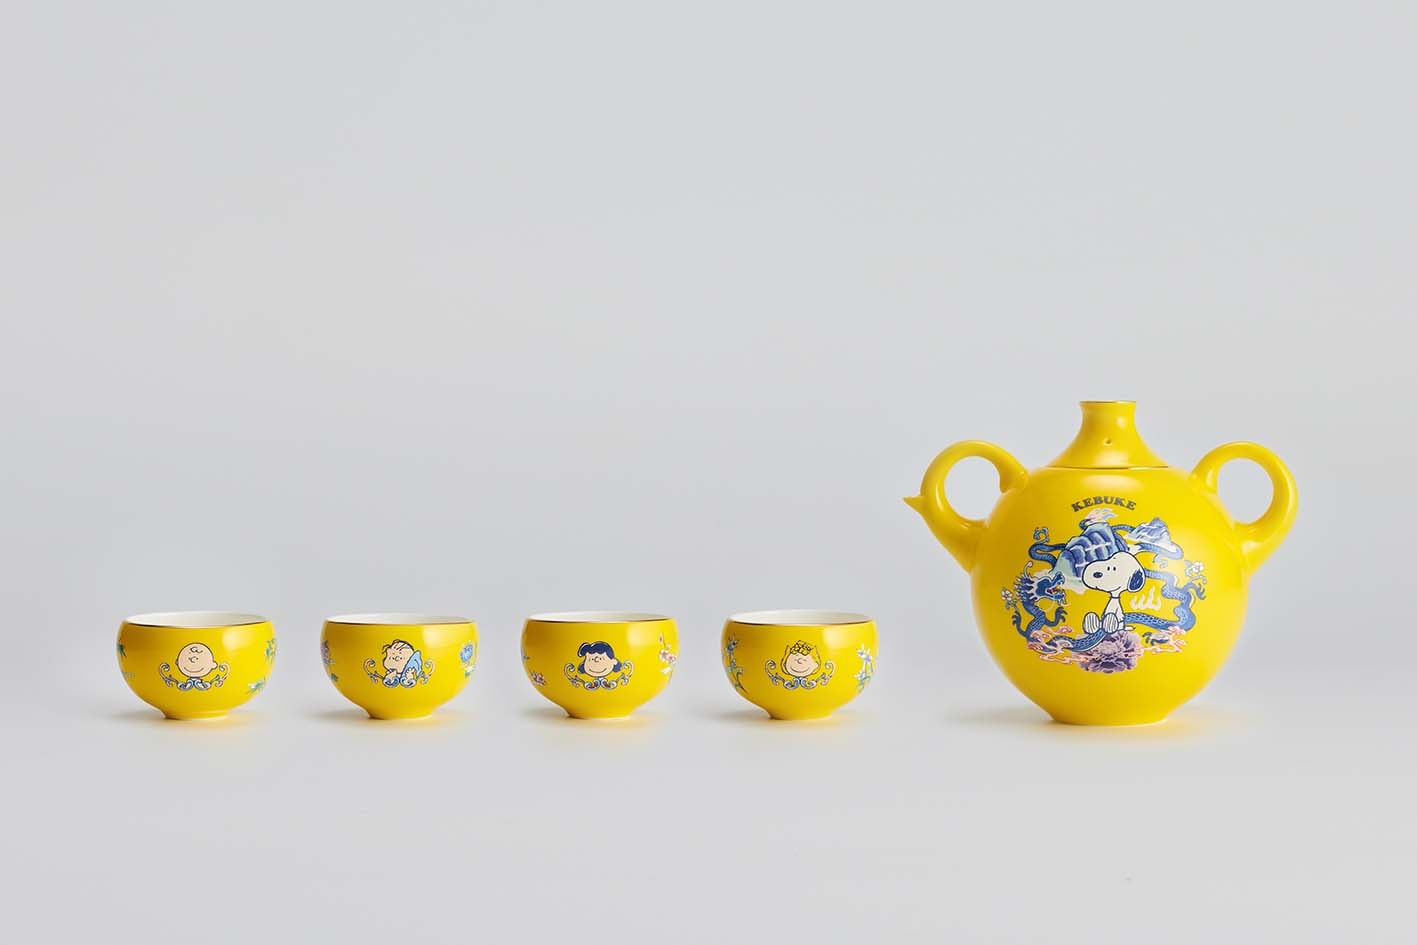 KEBUKE 聯手 PEANUTS 與台北故宮雙品牌 TALES 神話言推出聯乘茶具組